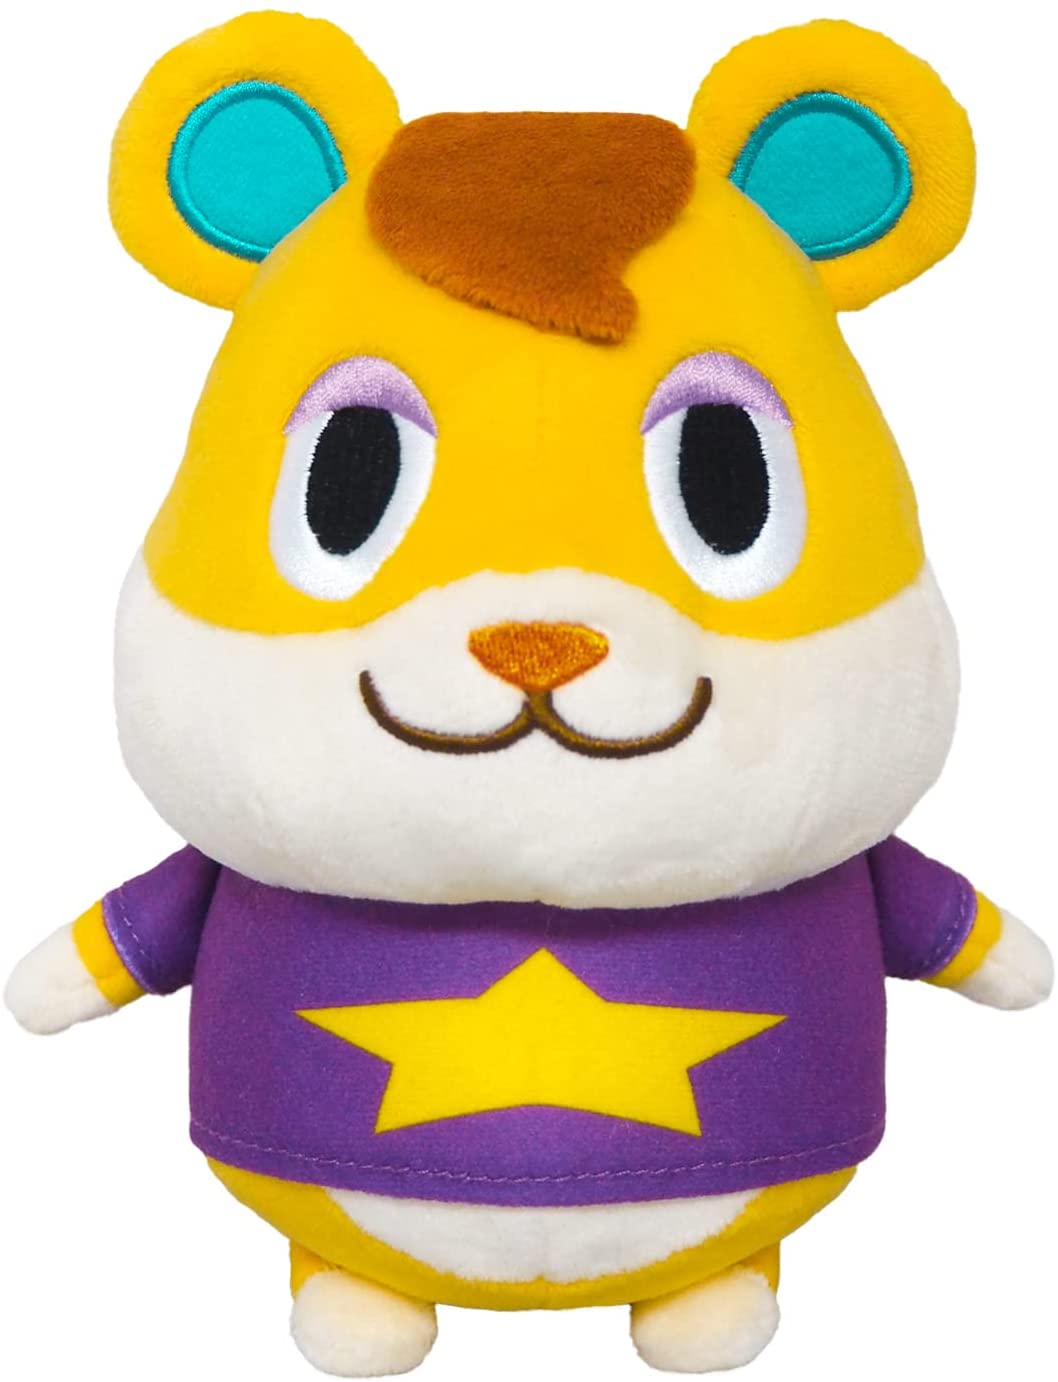 Plush Animal Crossing New Horizons ALL STAR COLLECTION SAN-EI Nintendo